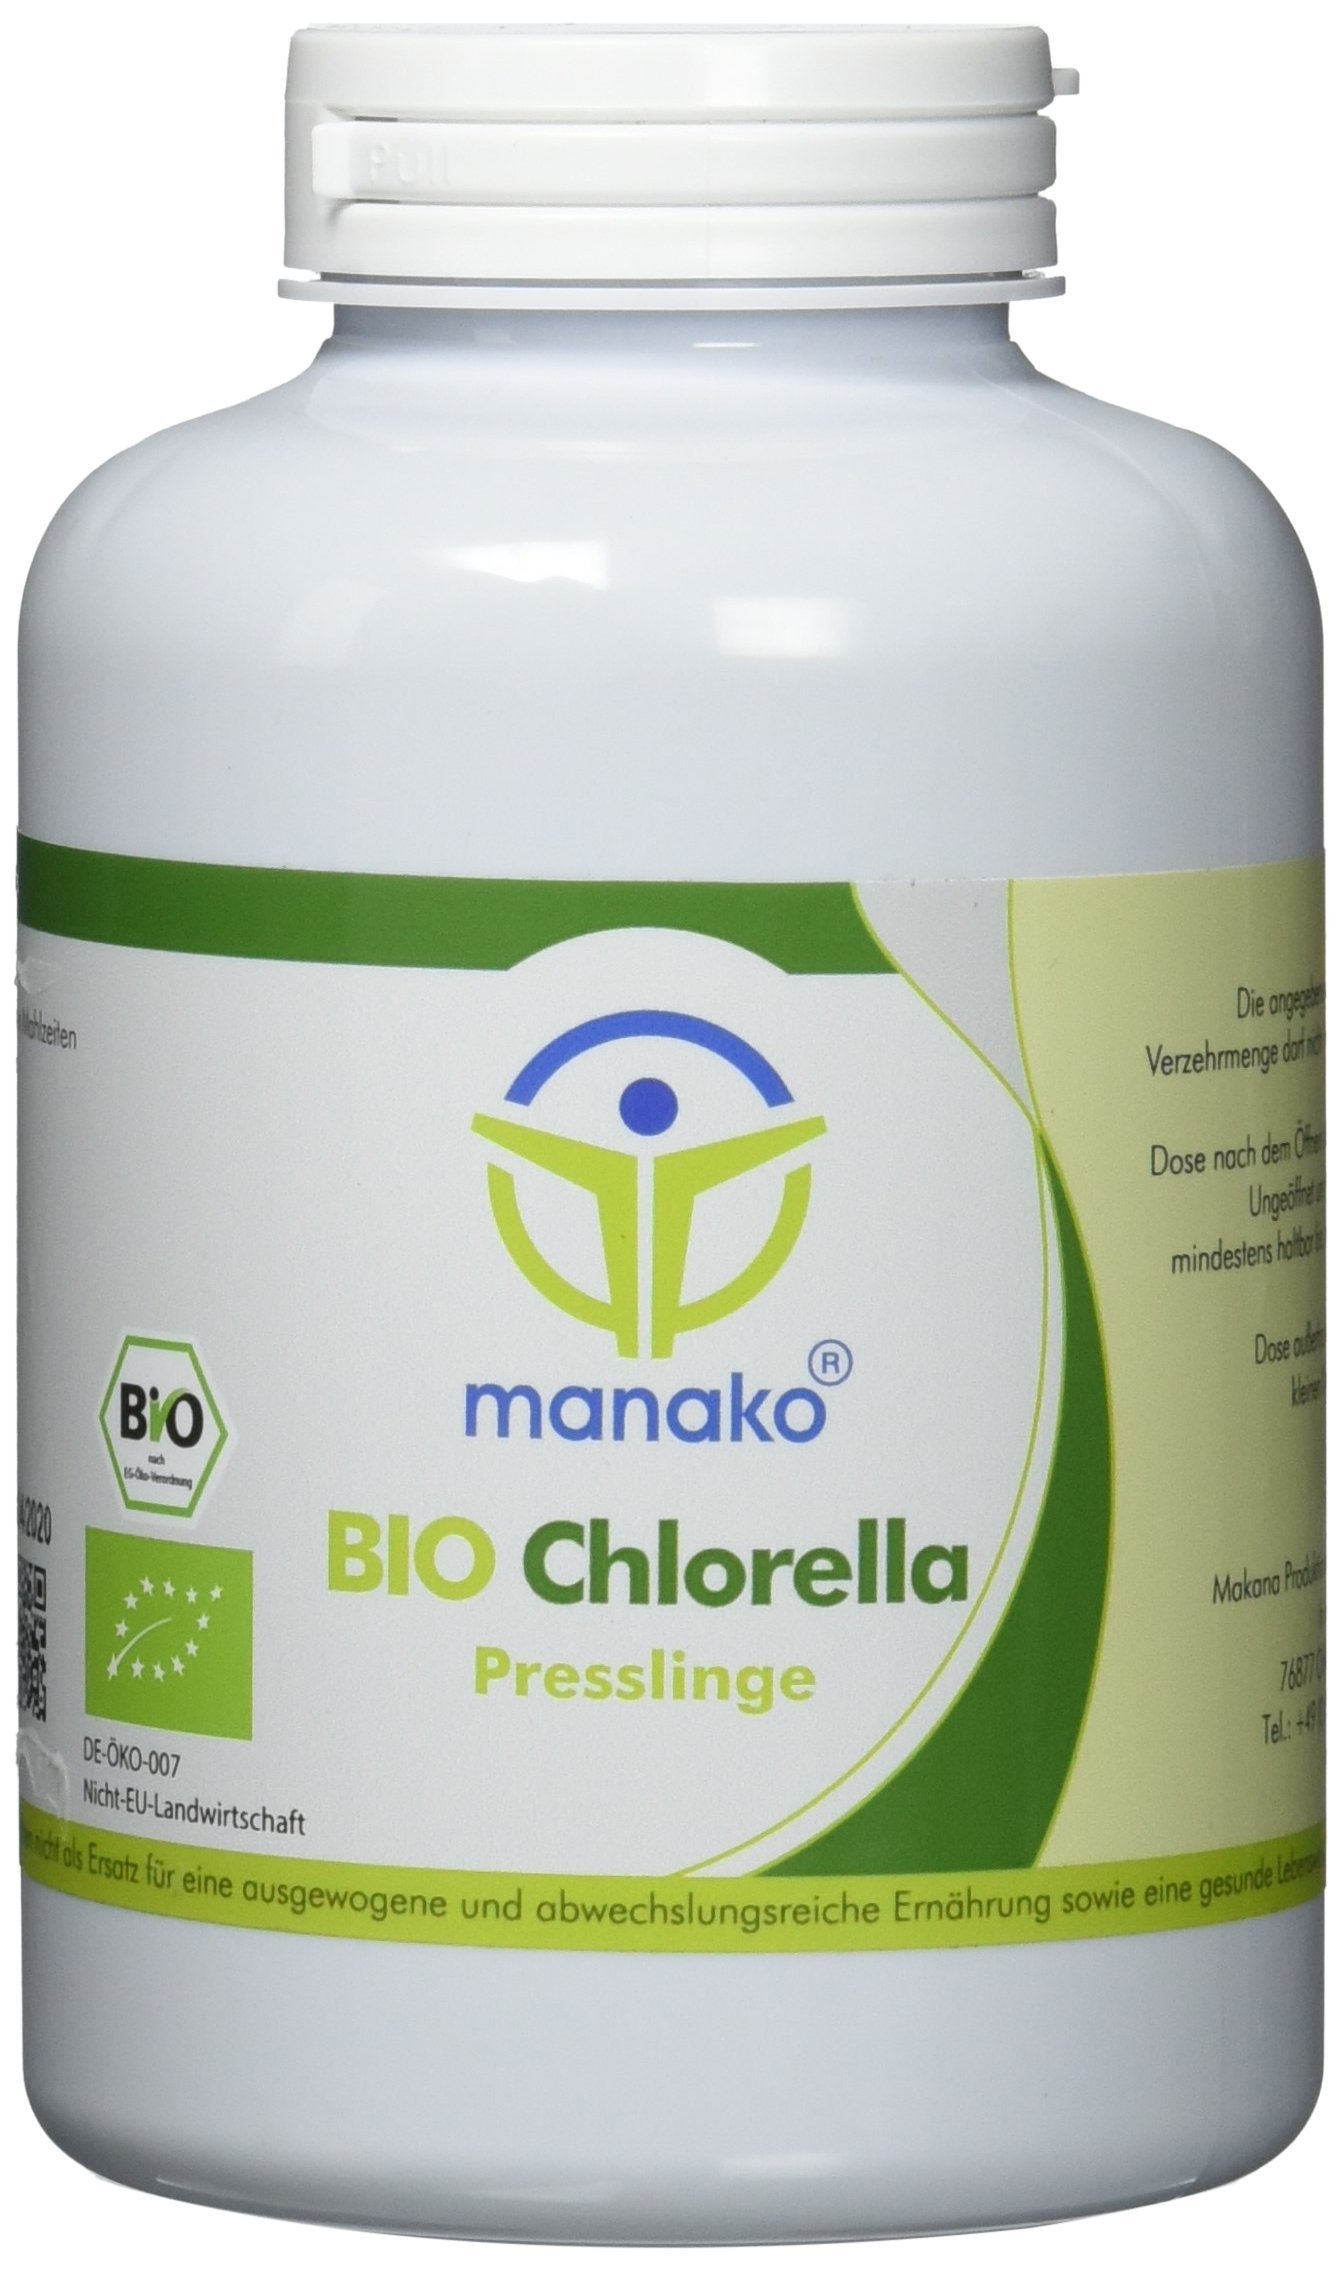 Manako Bio Chlorella Presslinge à 400mg, 1er Pack (1 x 250 g) - Bio